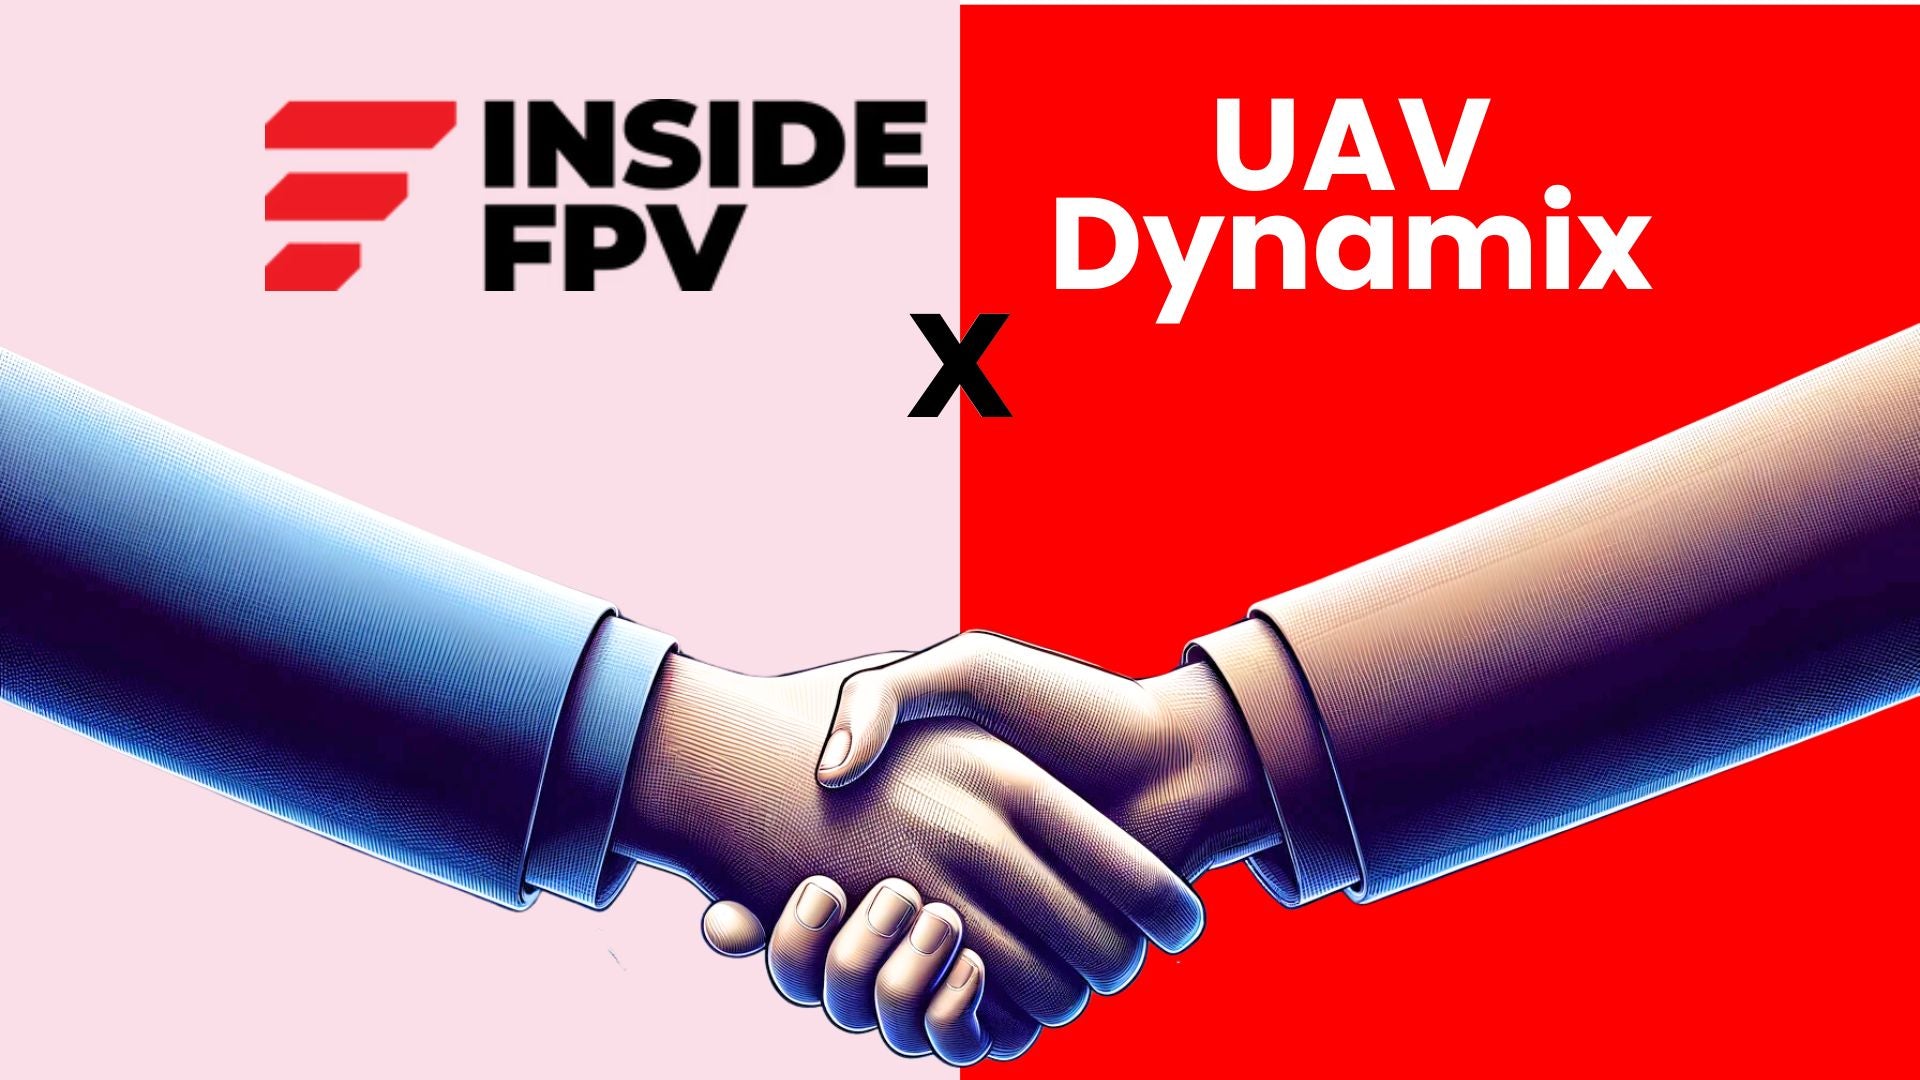 InsideFPV x UAV Dynamix: MoU Signed